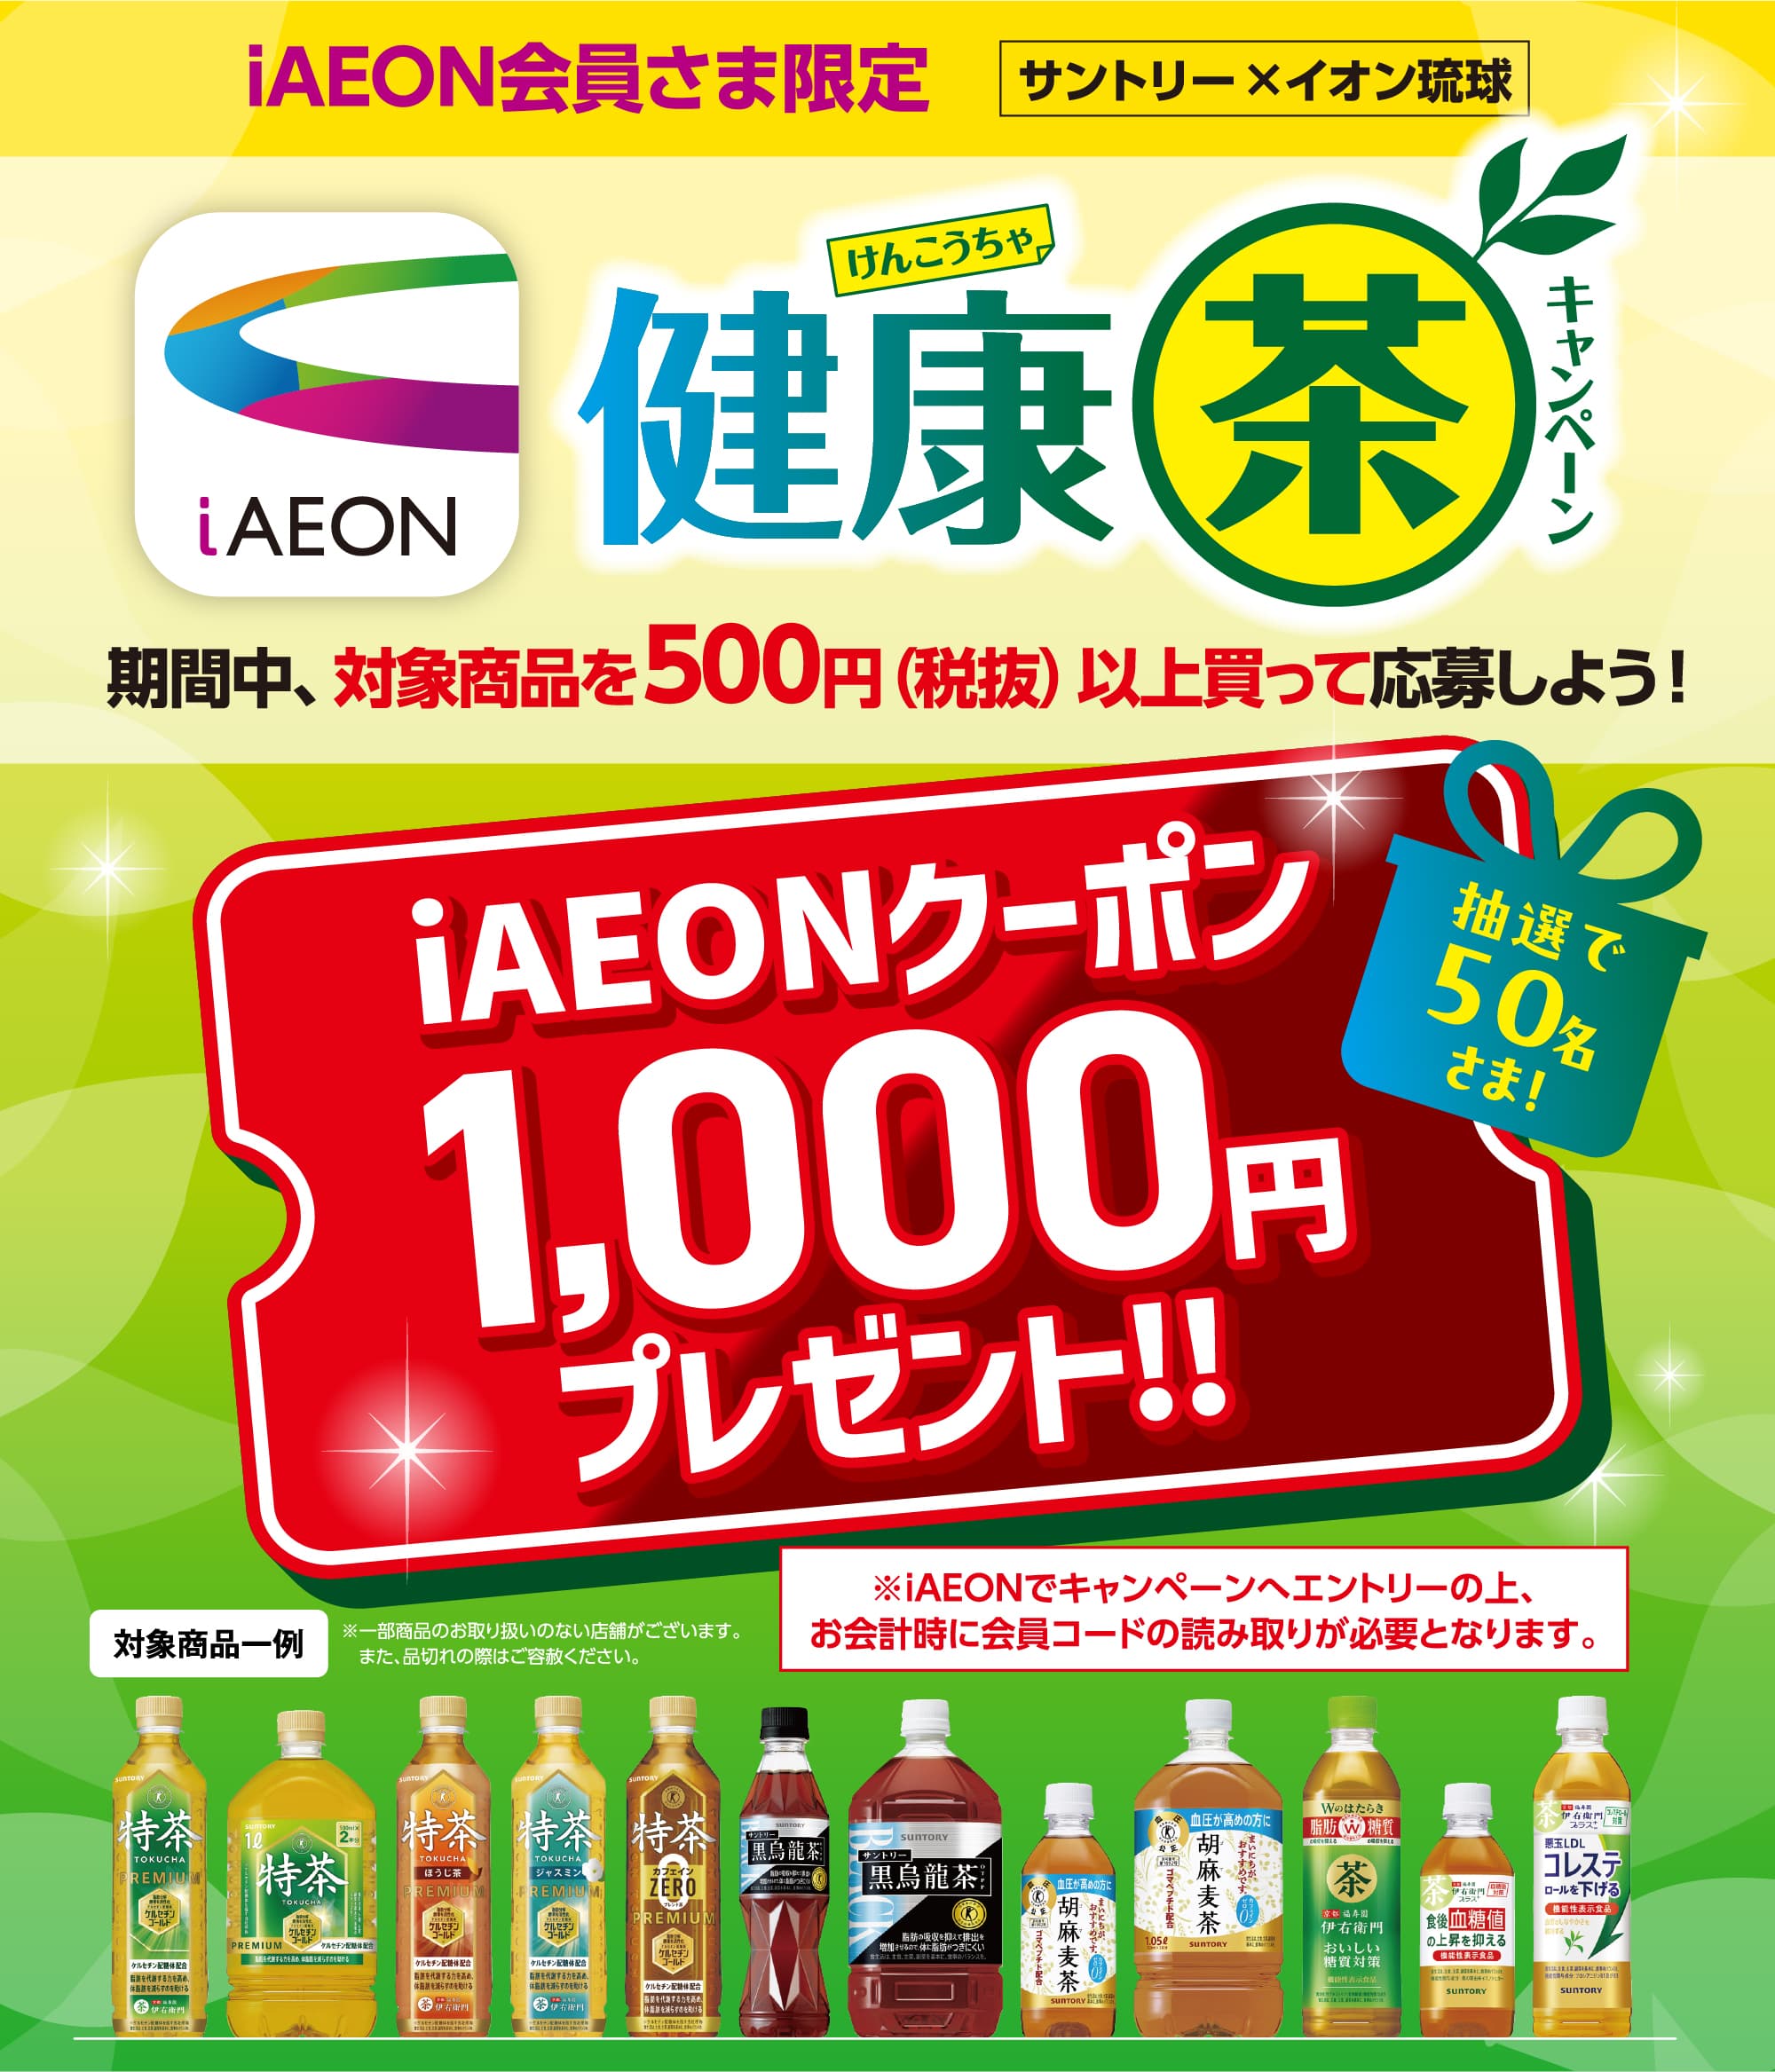 iAEON会員さま限定 サントリー×イオン琉球 健康茶キャンペーン